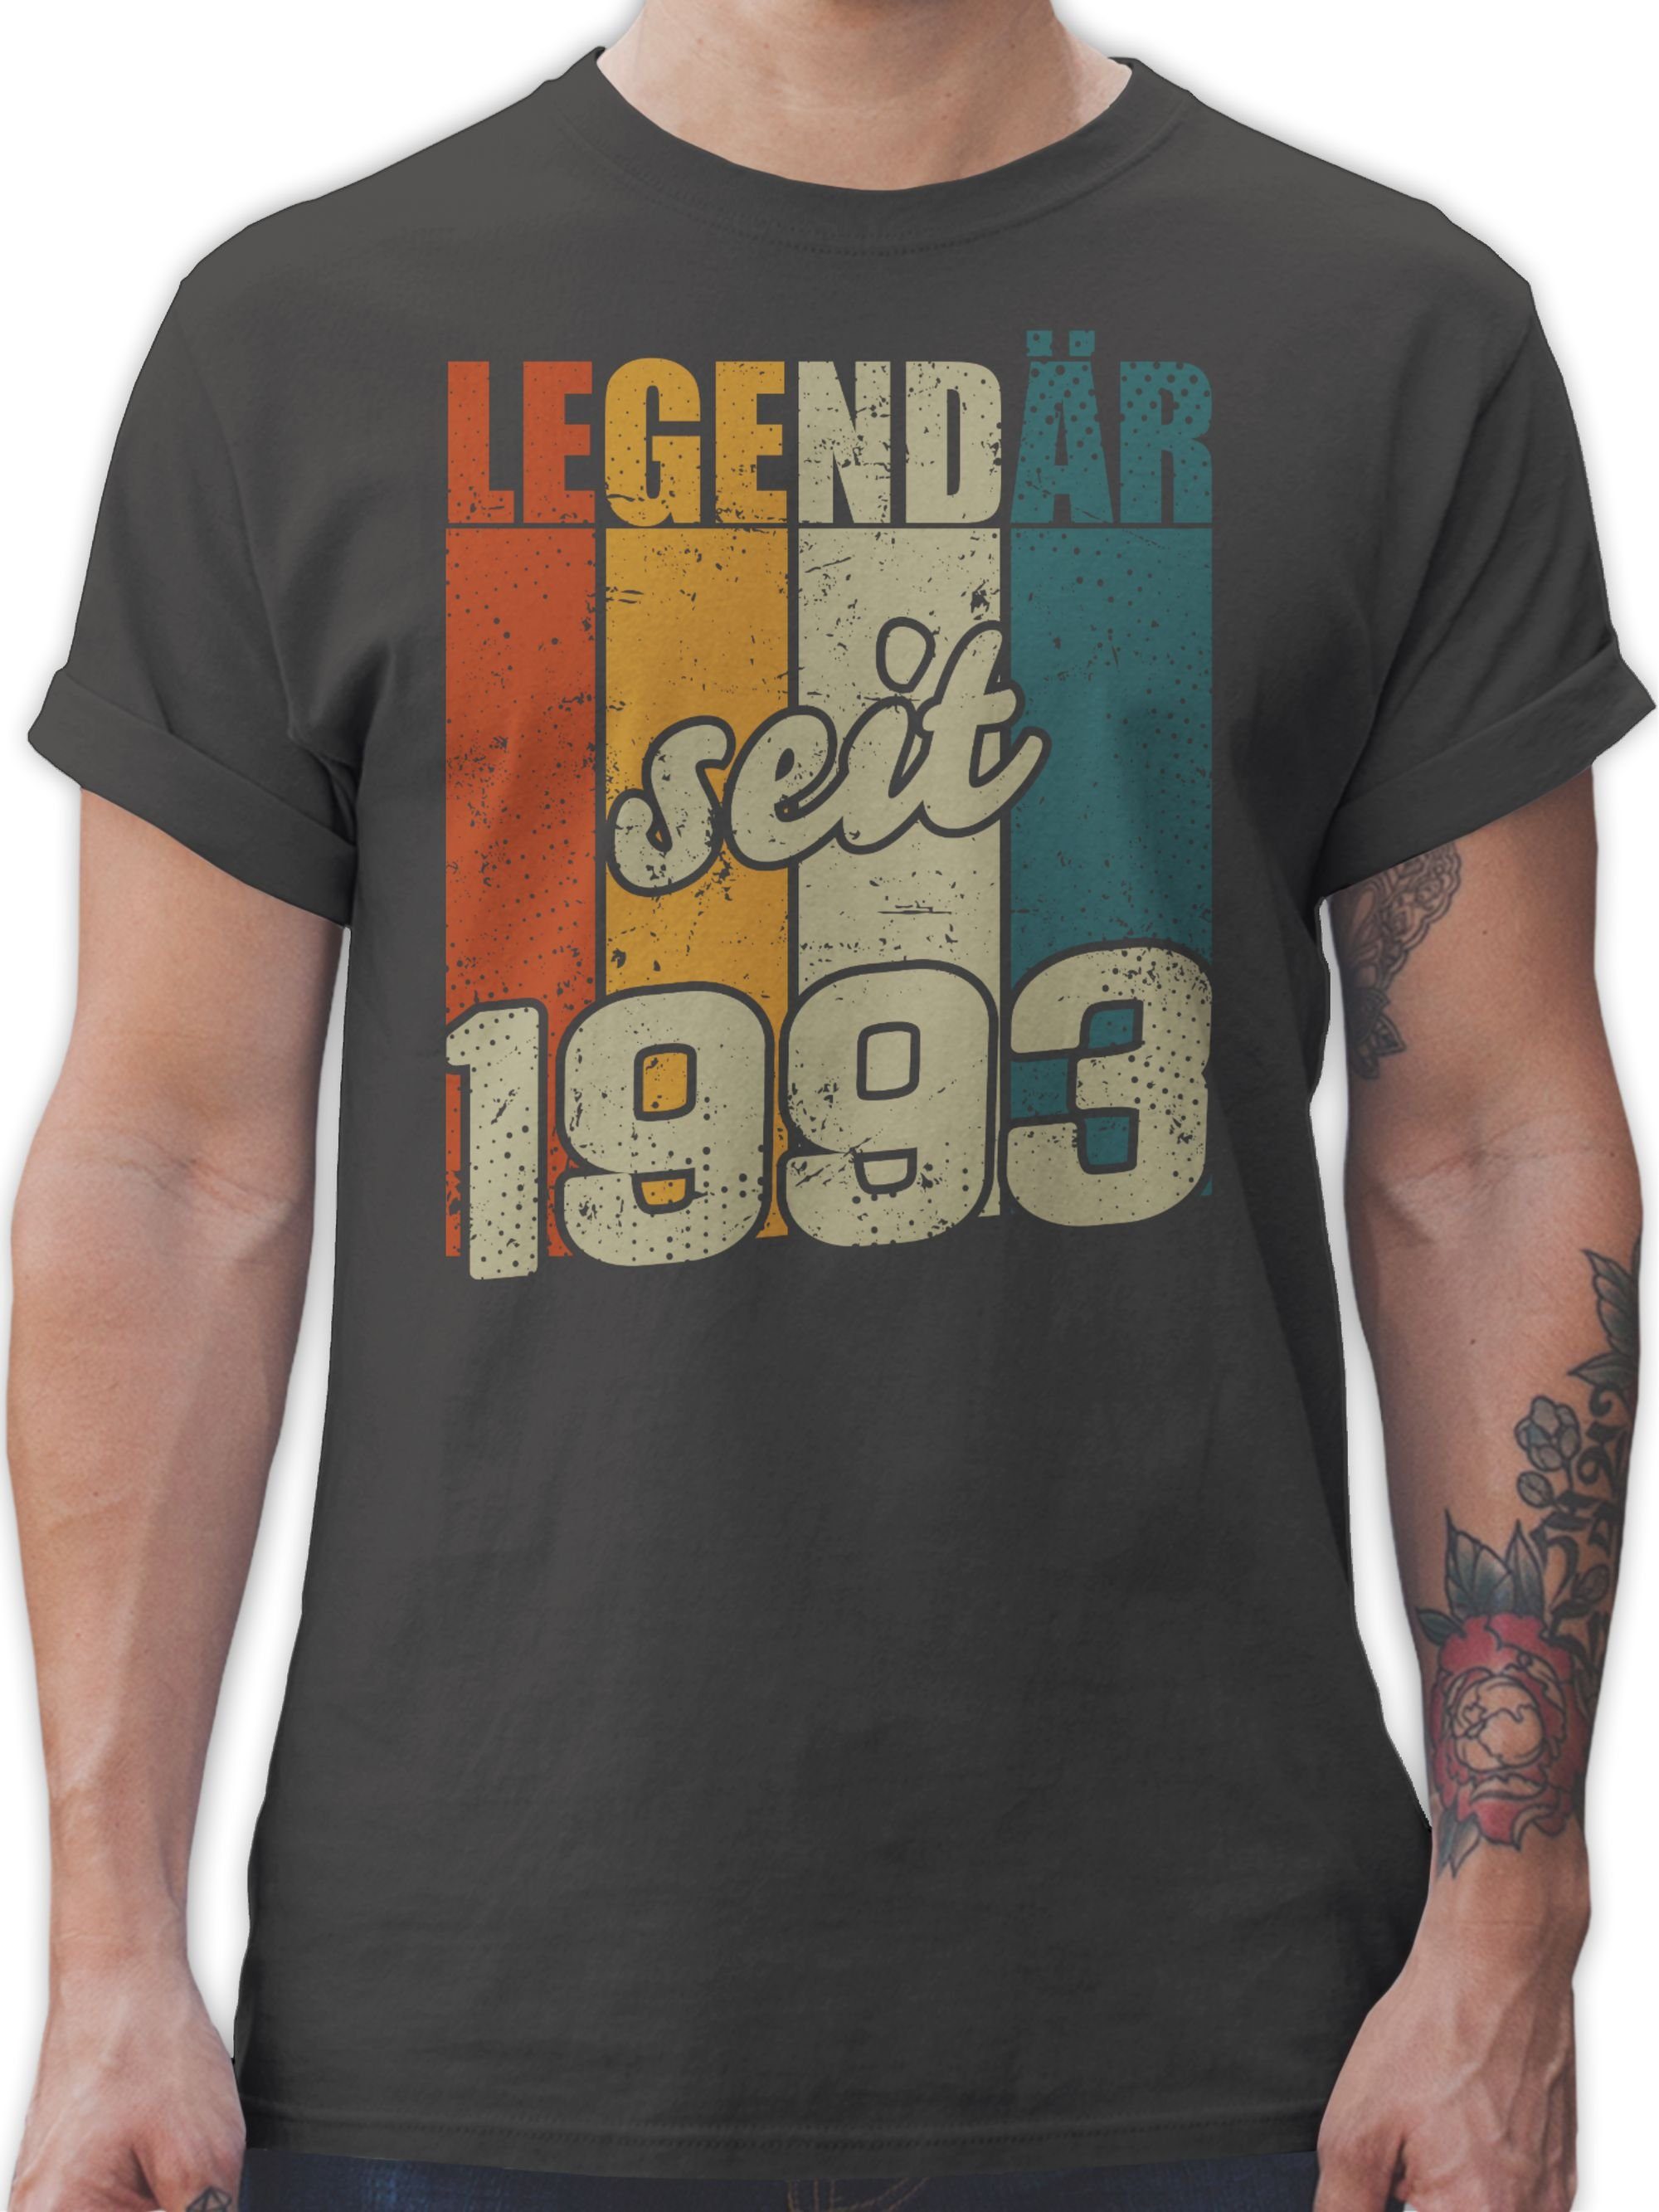 Shirtracer T-Shirt Geburtstag 1993 01 30. Dunkelgrau seit Legendär